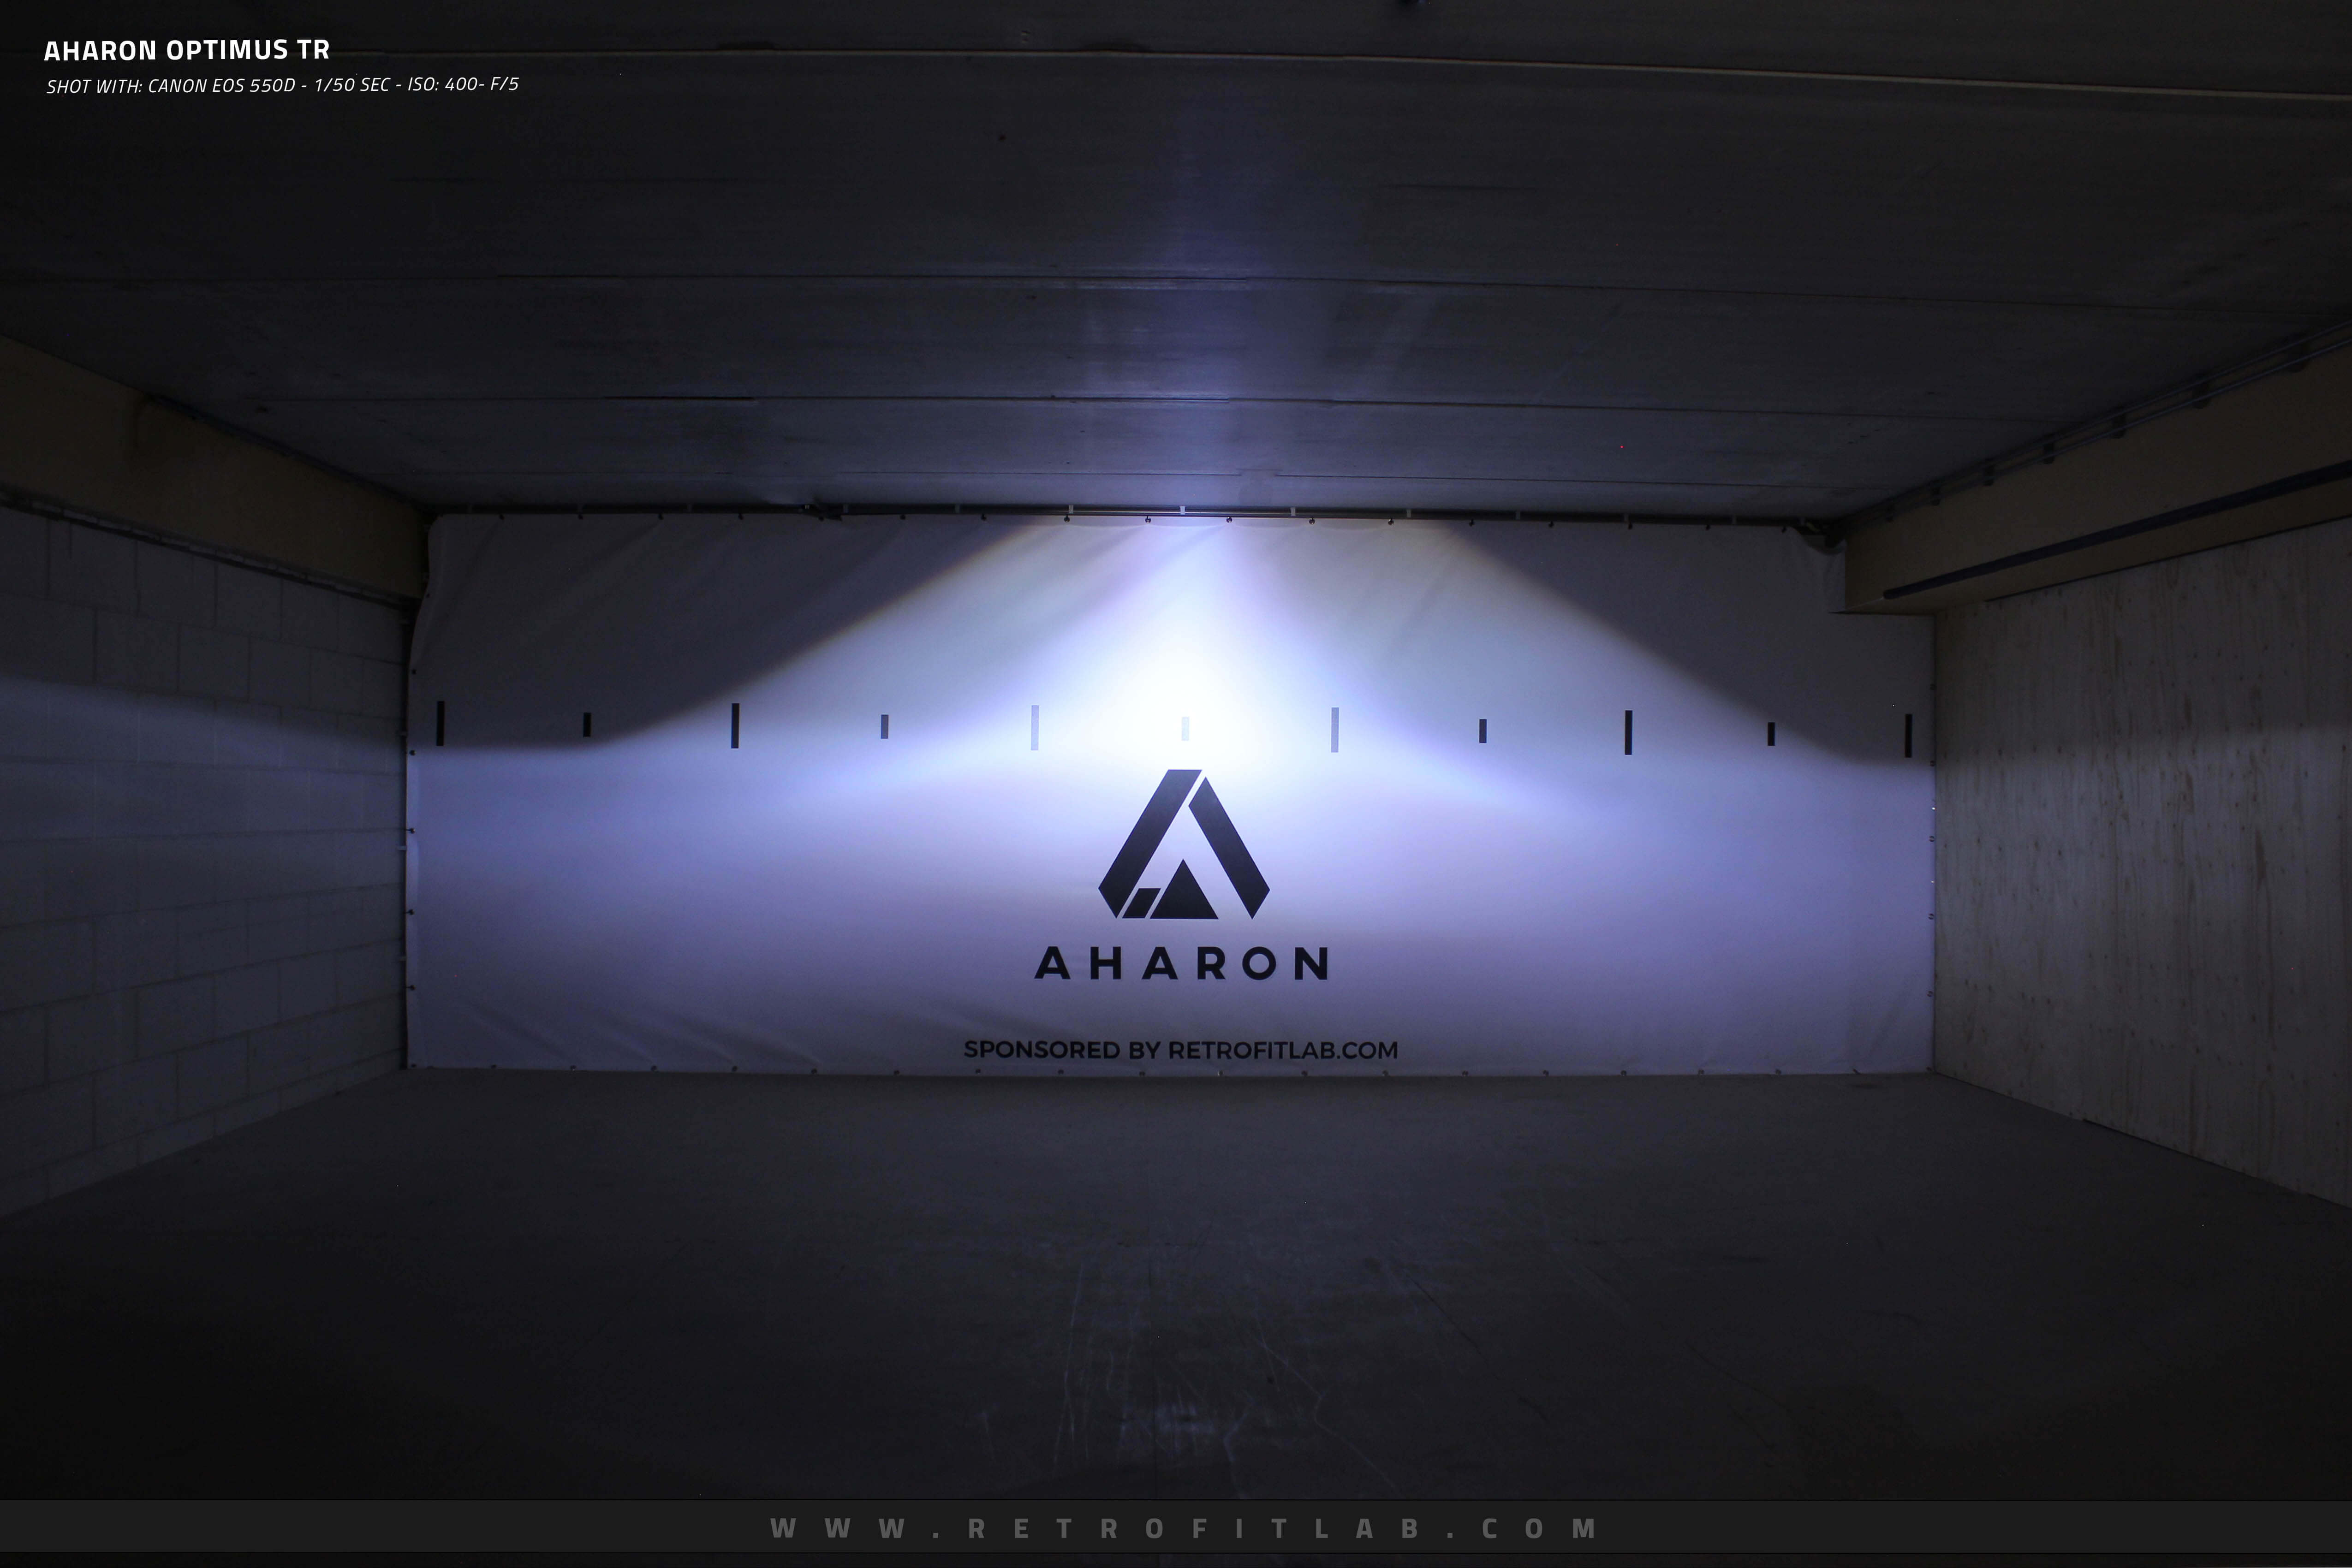 Aaron Optimus TR - Bi-xenon projectors